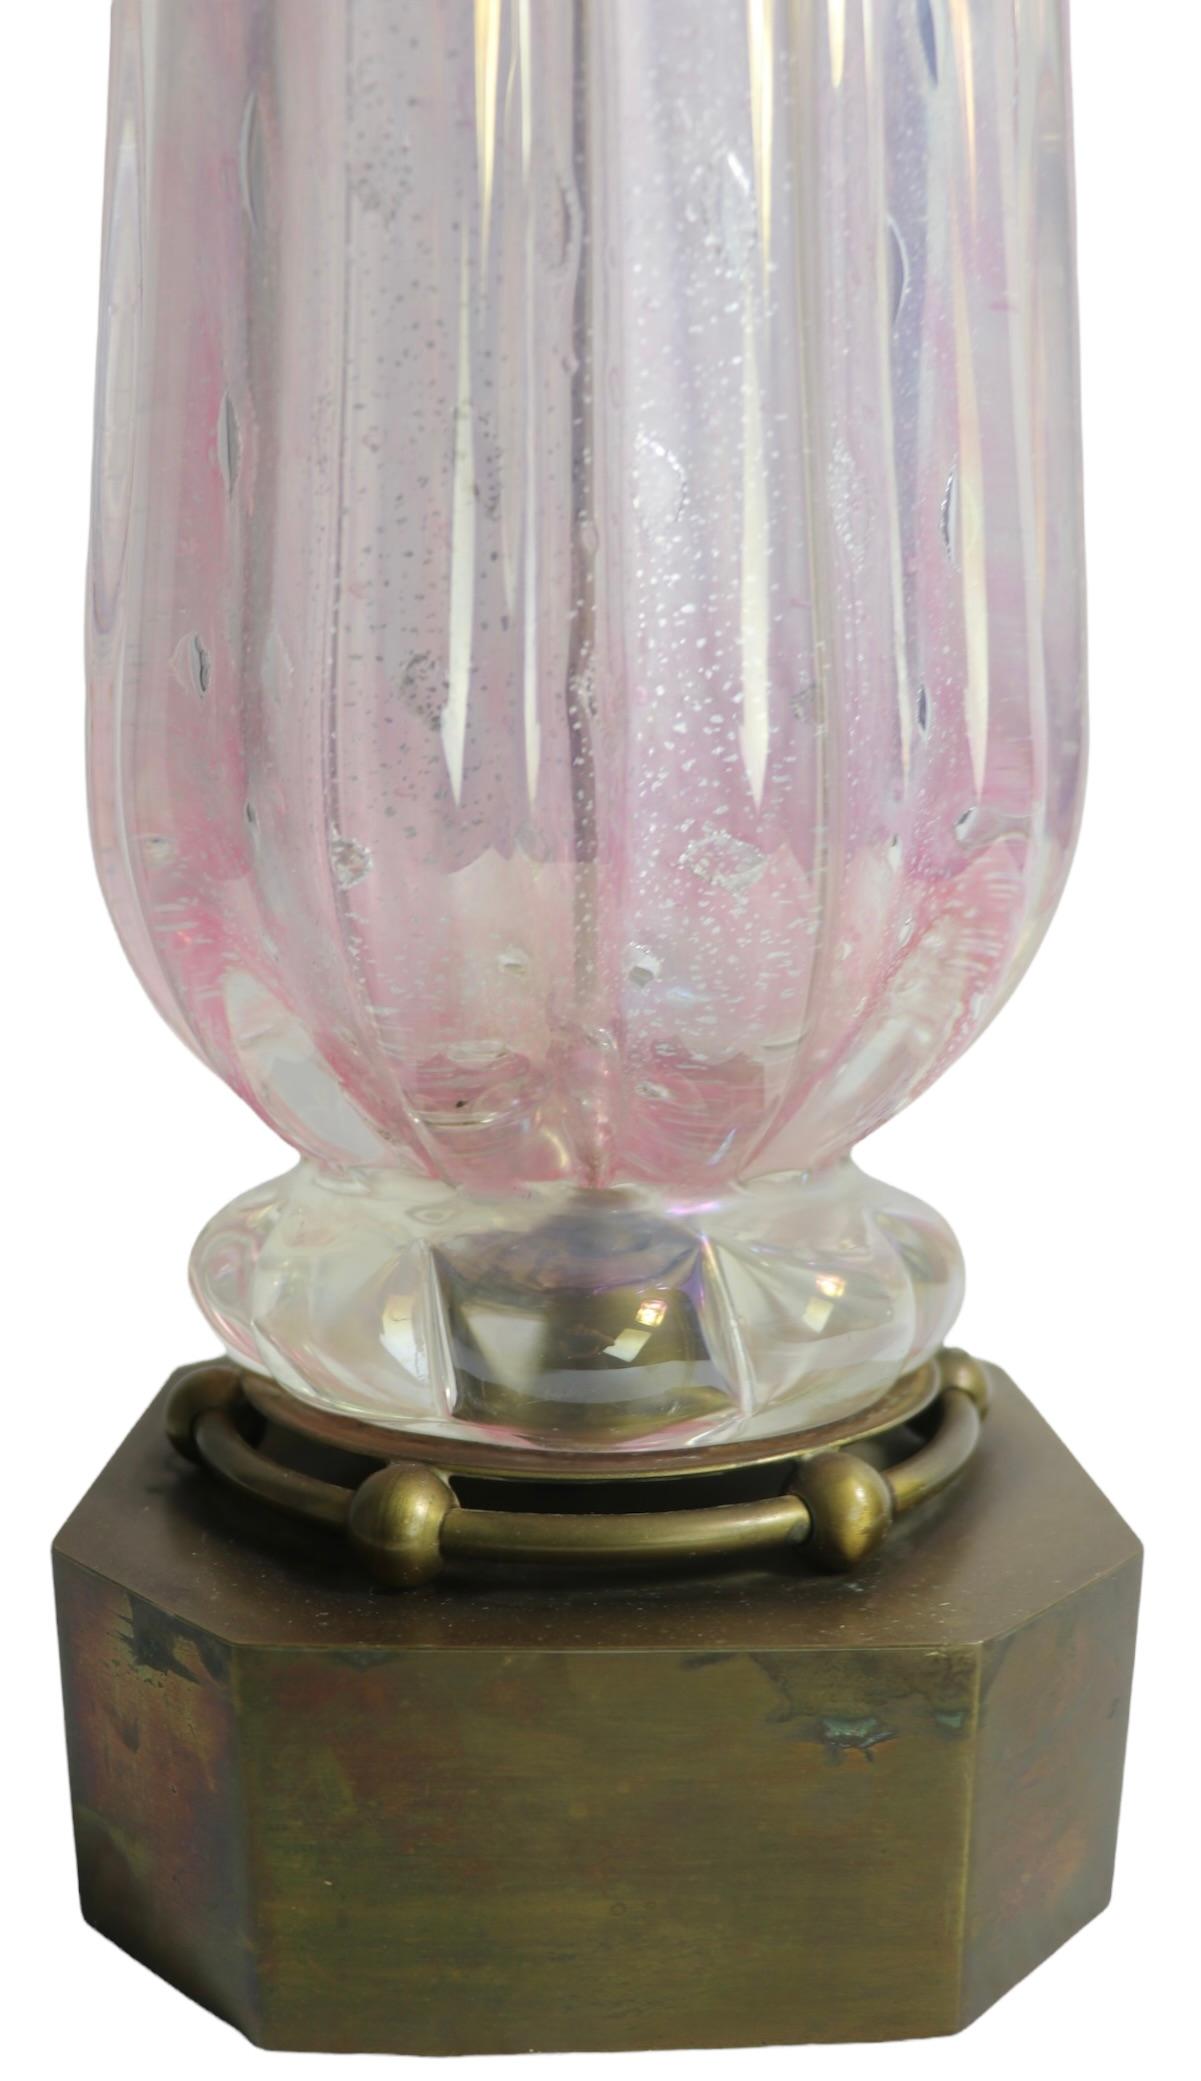 20th Century Murano Art Glass Table Lamp by Barovier